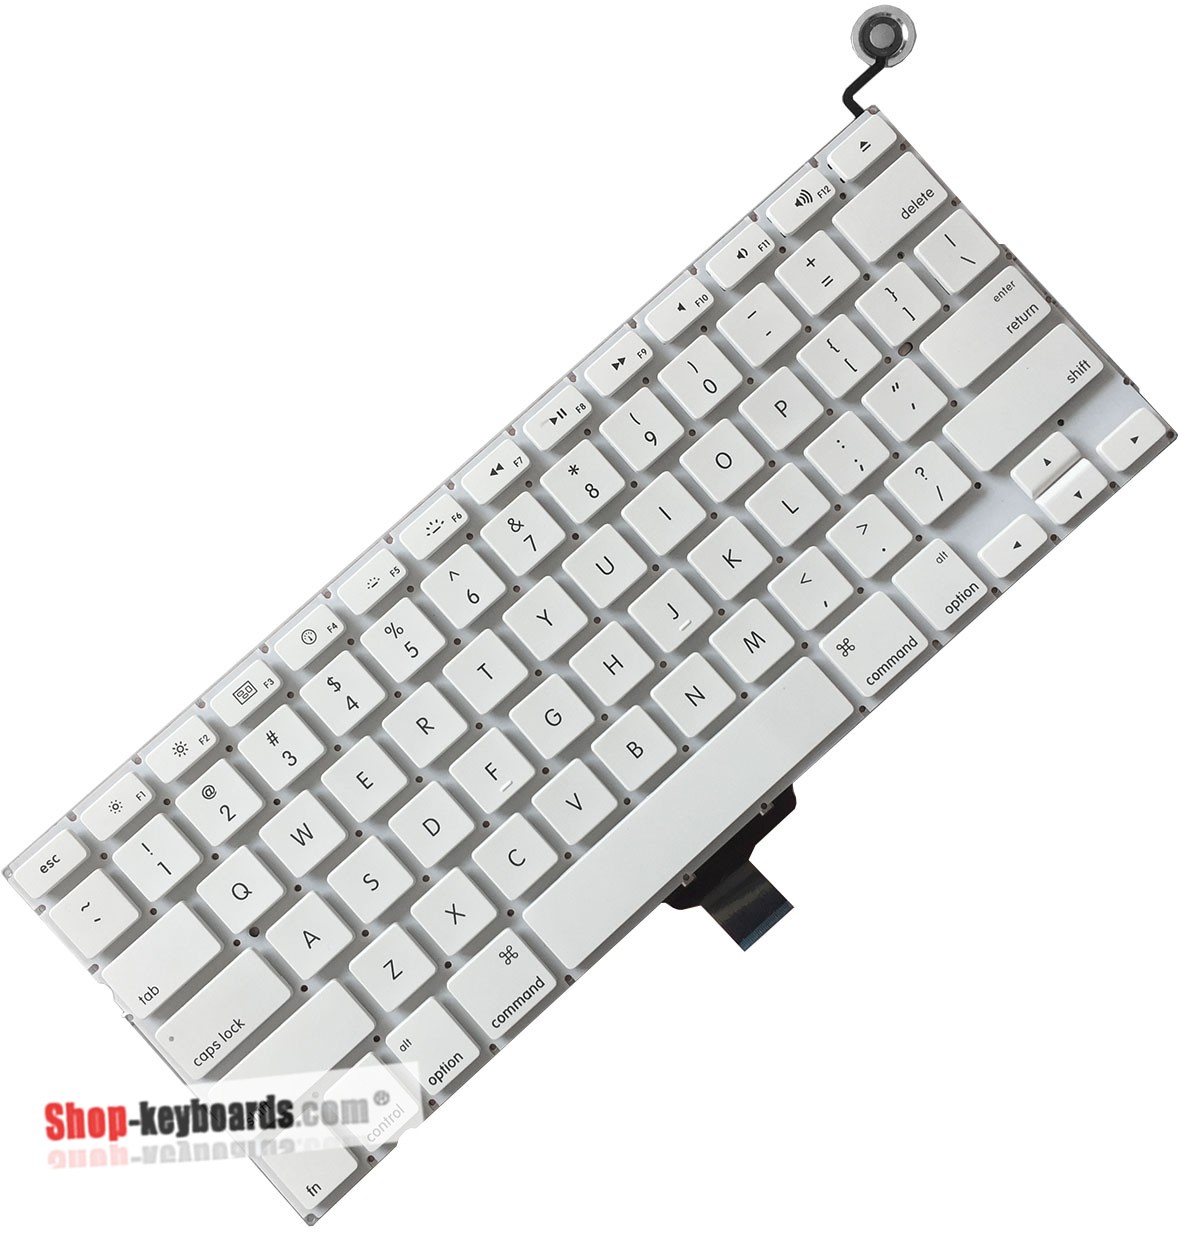 Apple MACBOOK UNIBODY 13 INCH MC516LL/A Keyboard replacement